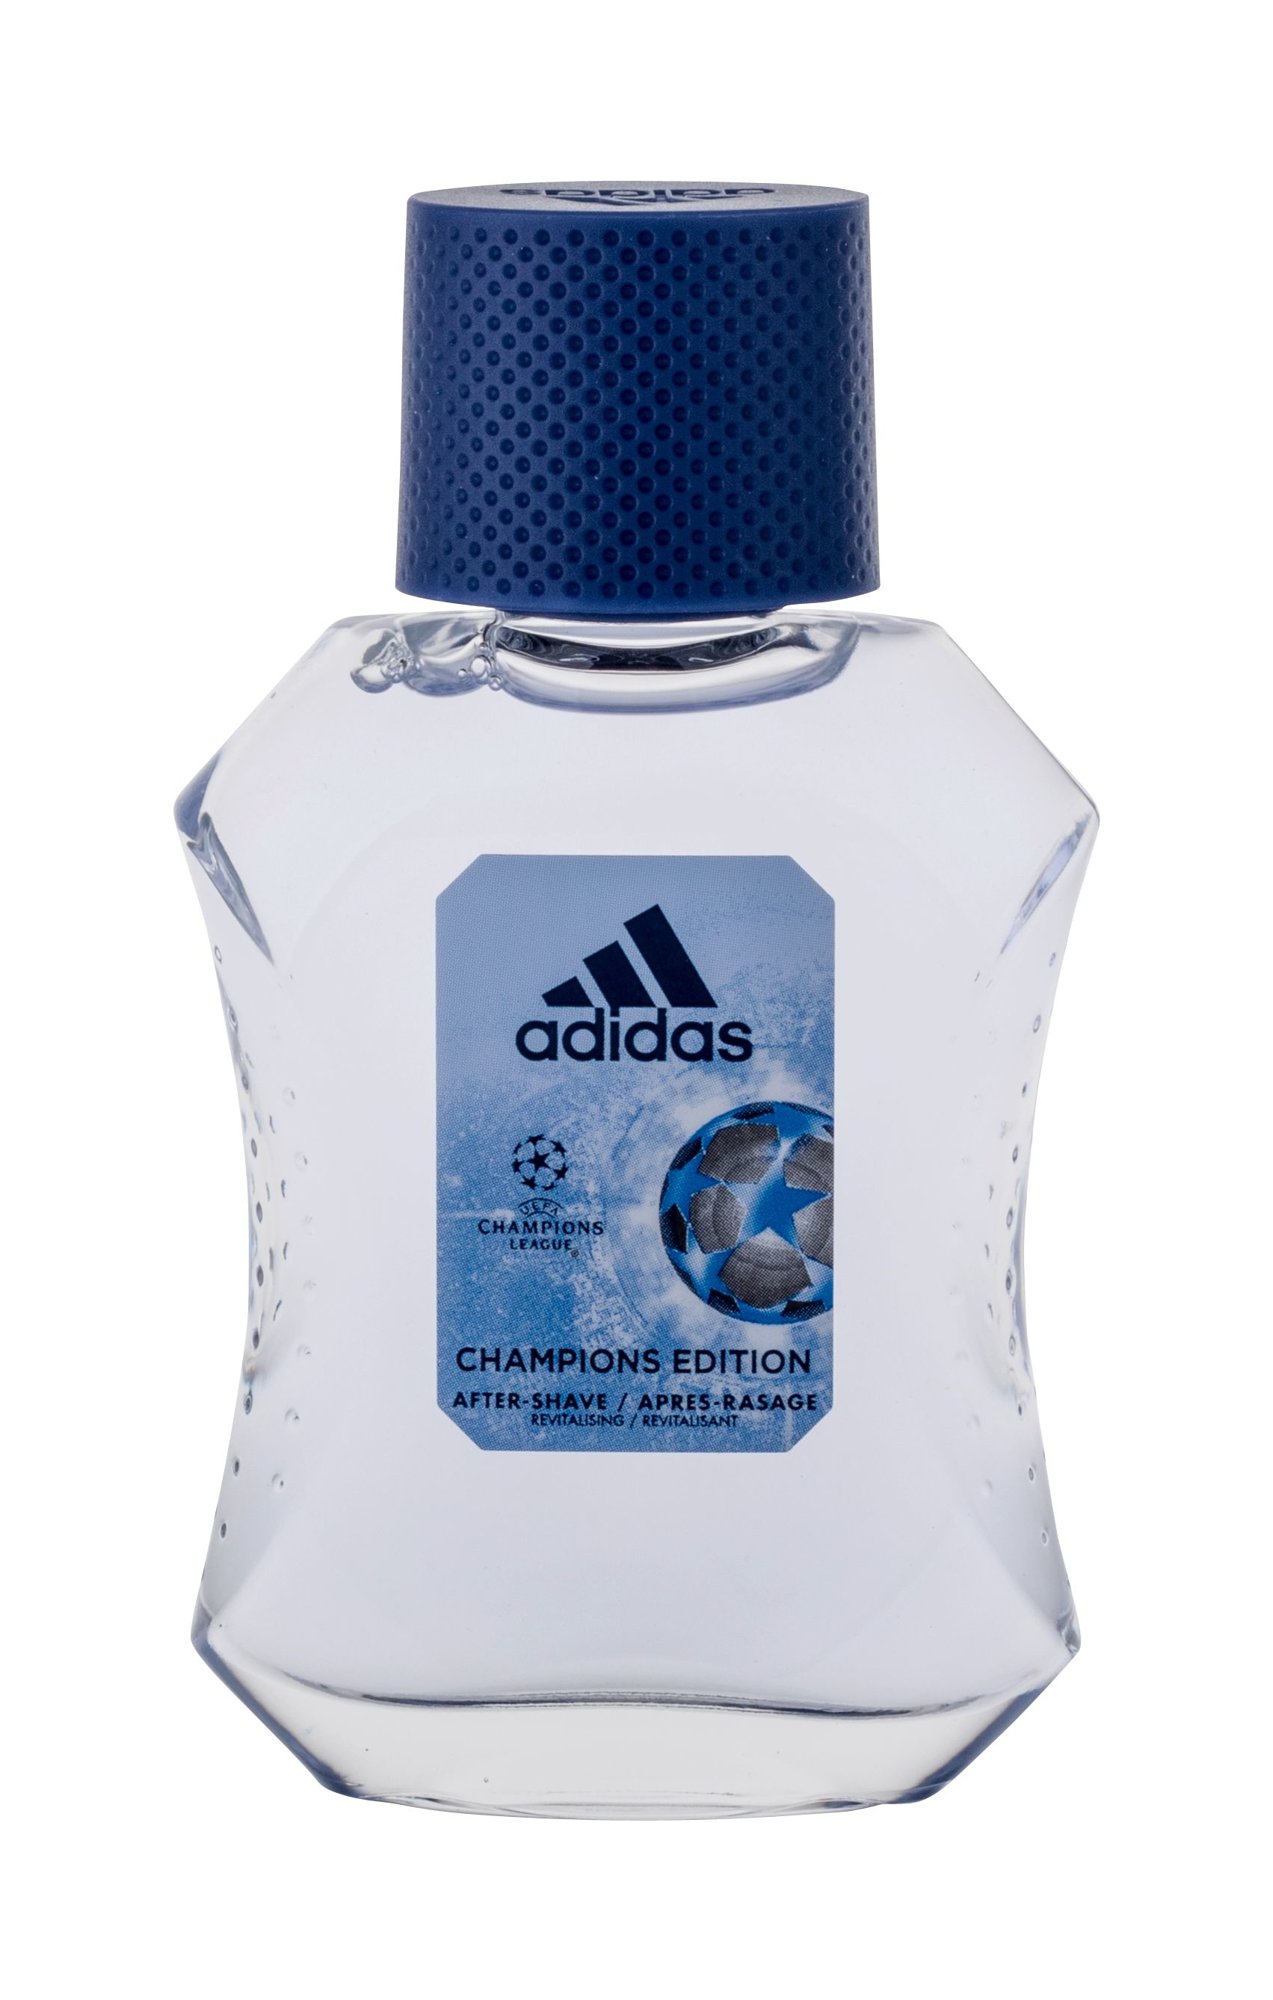 Adidas UEFA Champions League Champions Edition 50ml vanduo po skutimosi